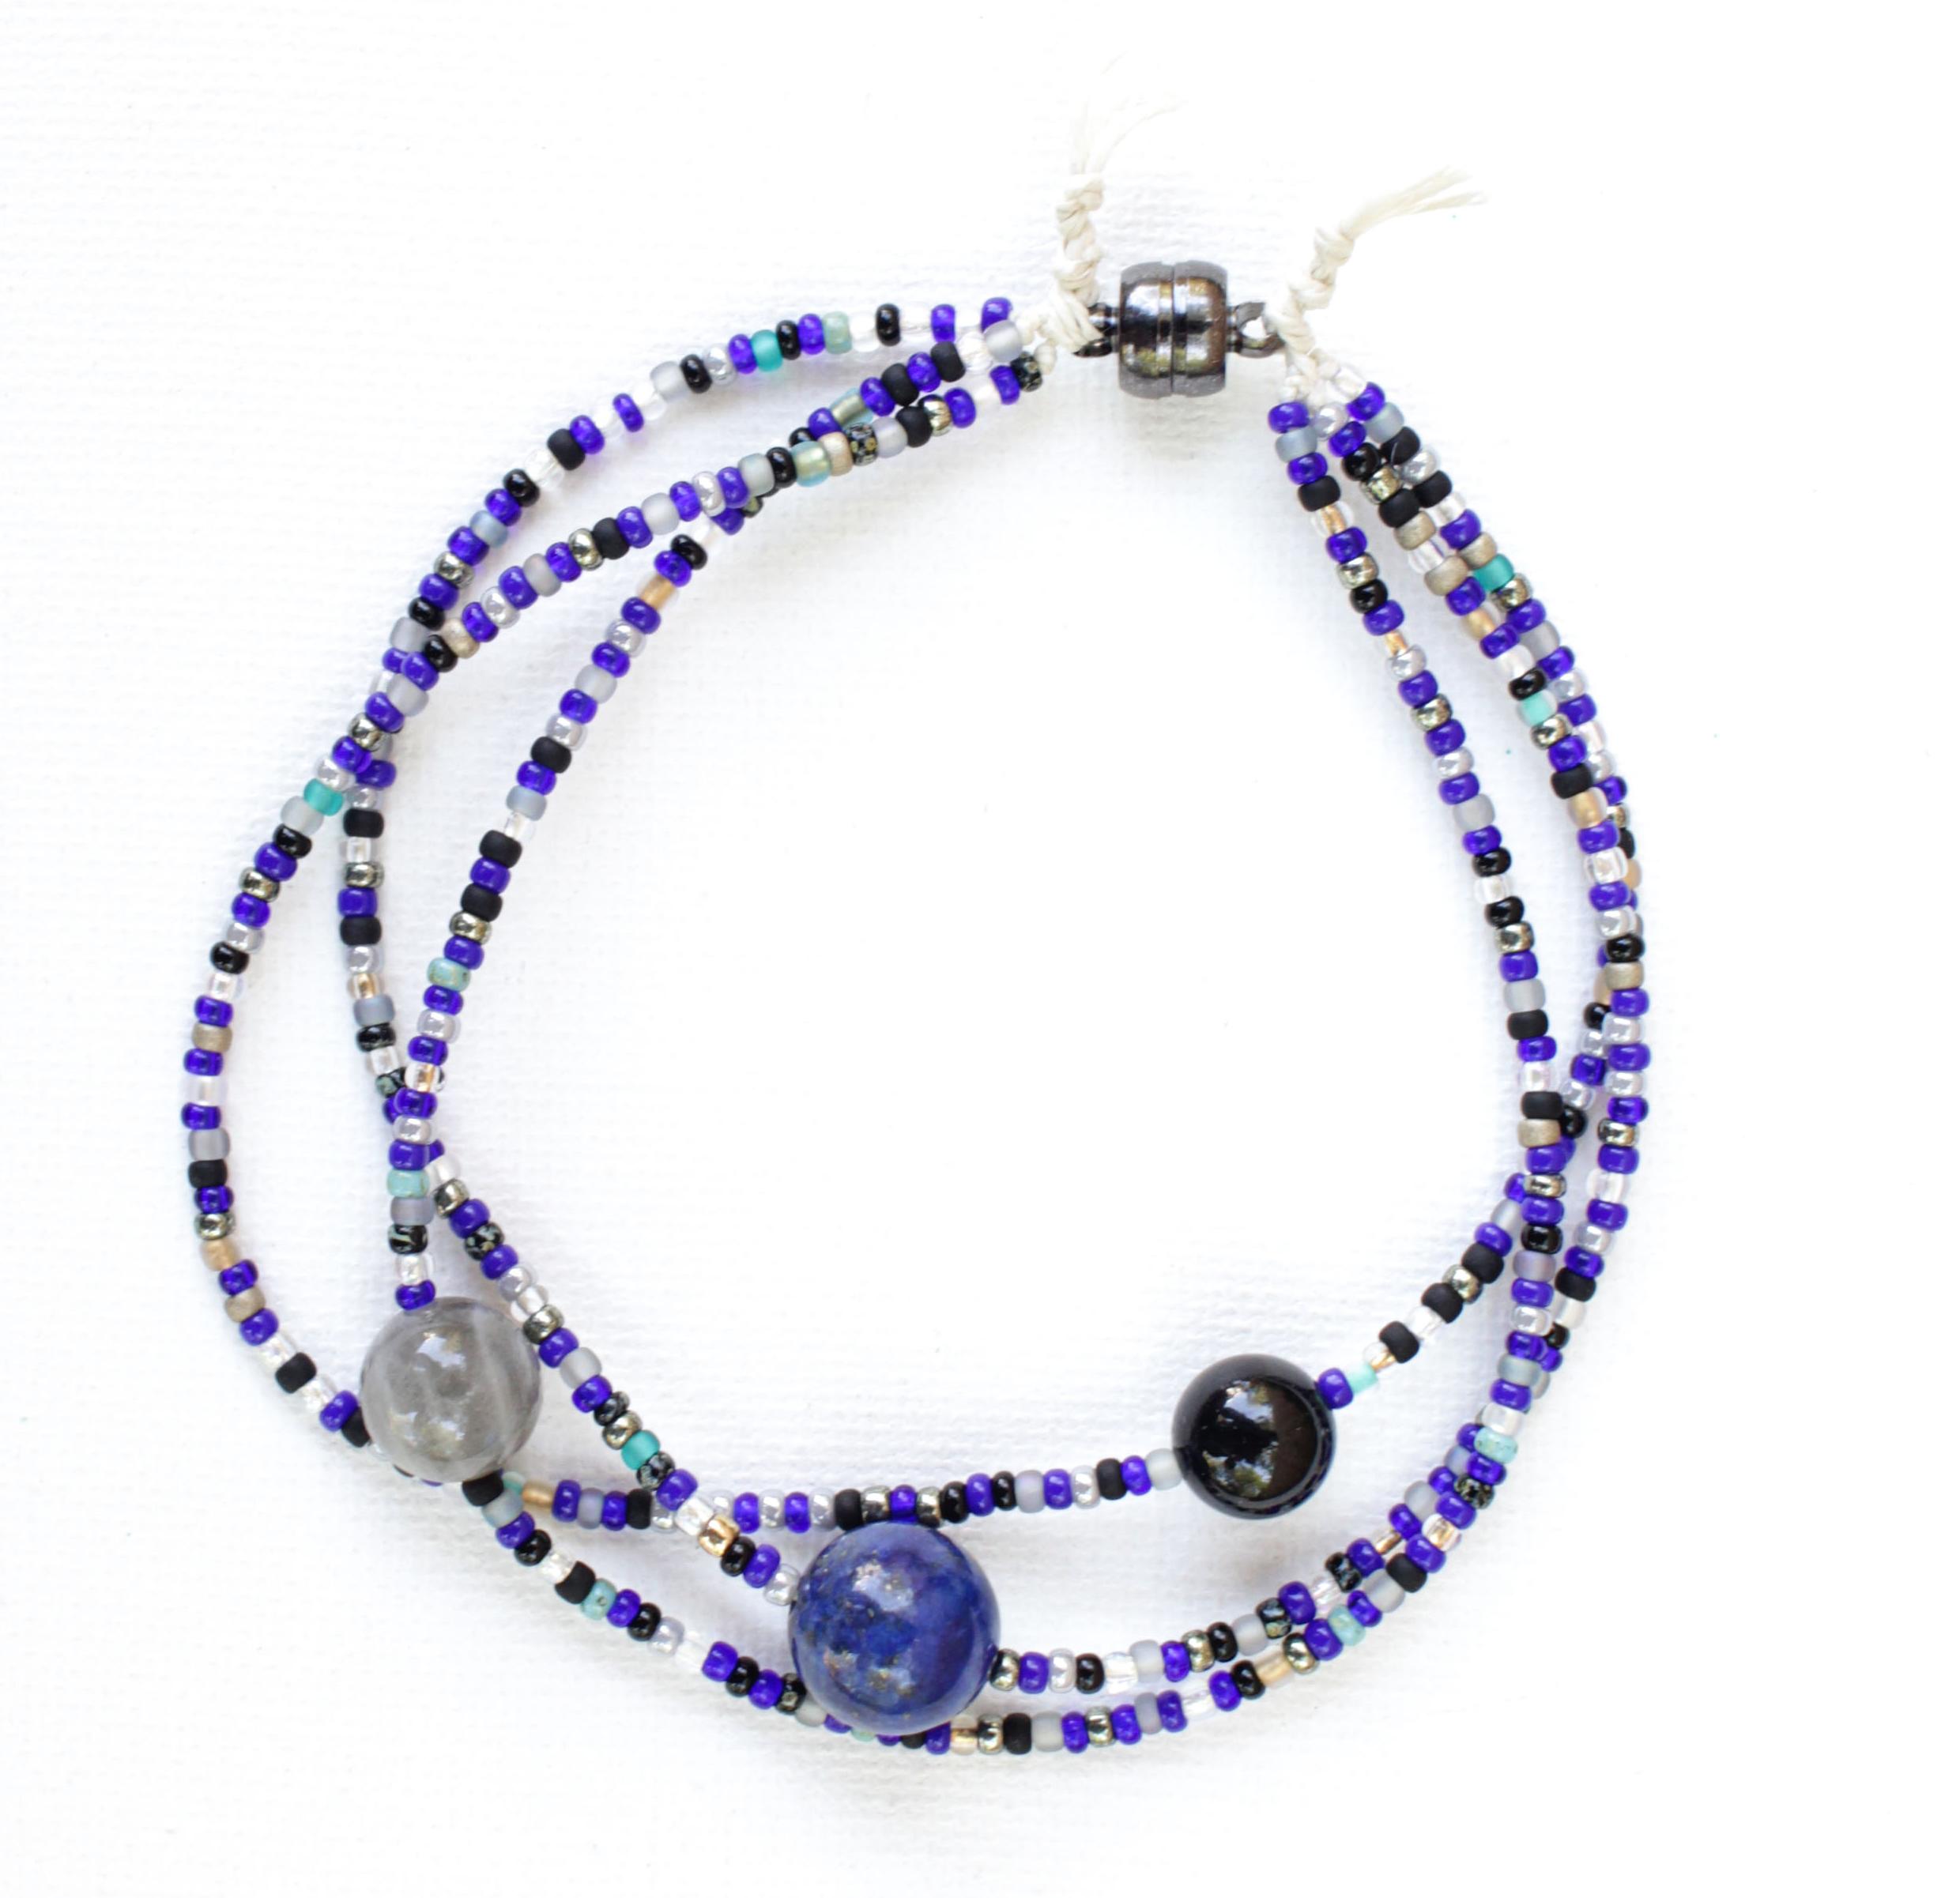 Mercury Retrograde Protection Crystals Seed Bead Bracelet Anklet | Lapis lazuli | Labradorite | Black Tourmaline | Made to Order Gift